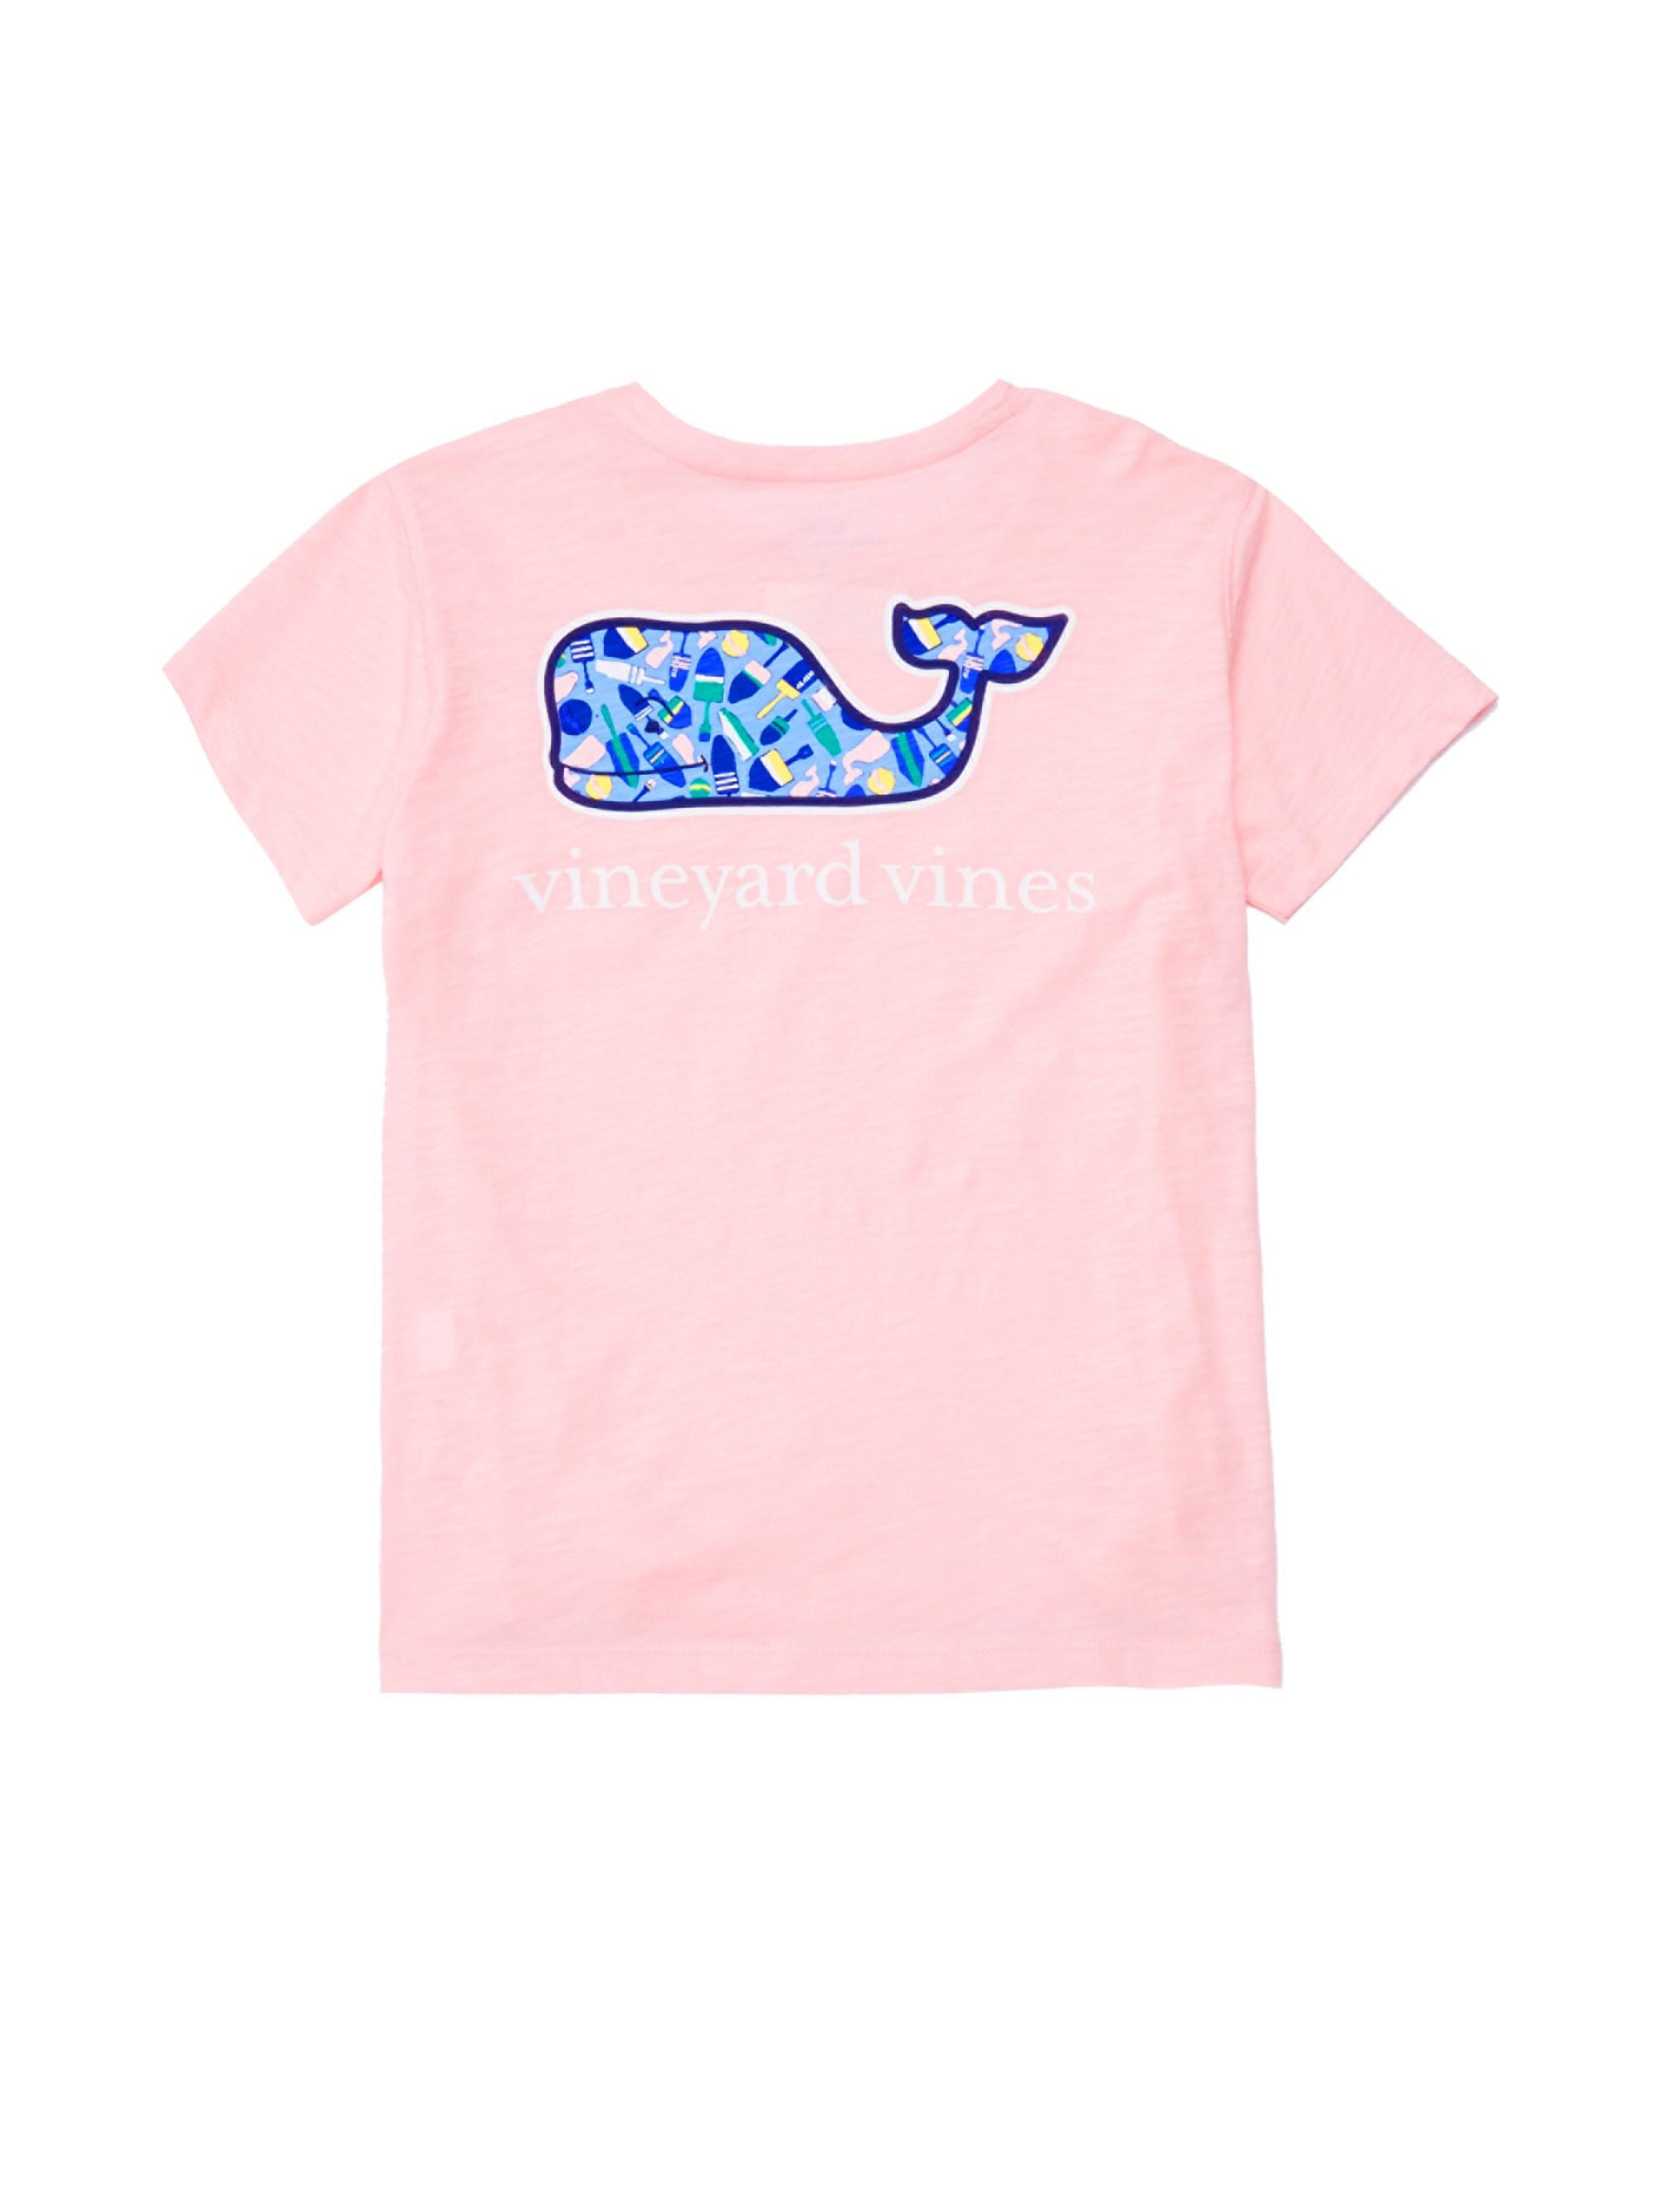 $70 VINEYARD VINES Girls DIAMOND WHALE TAIL Relaxed Shep Shirt S 7 8 XL 16 NWT